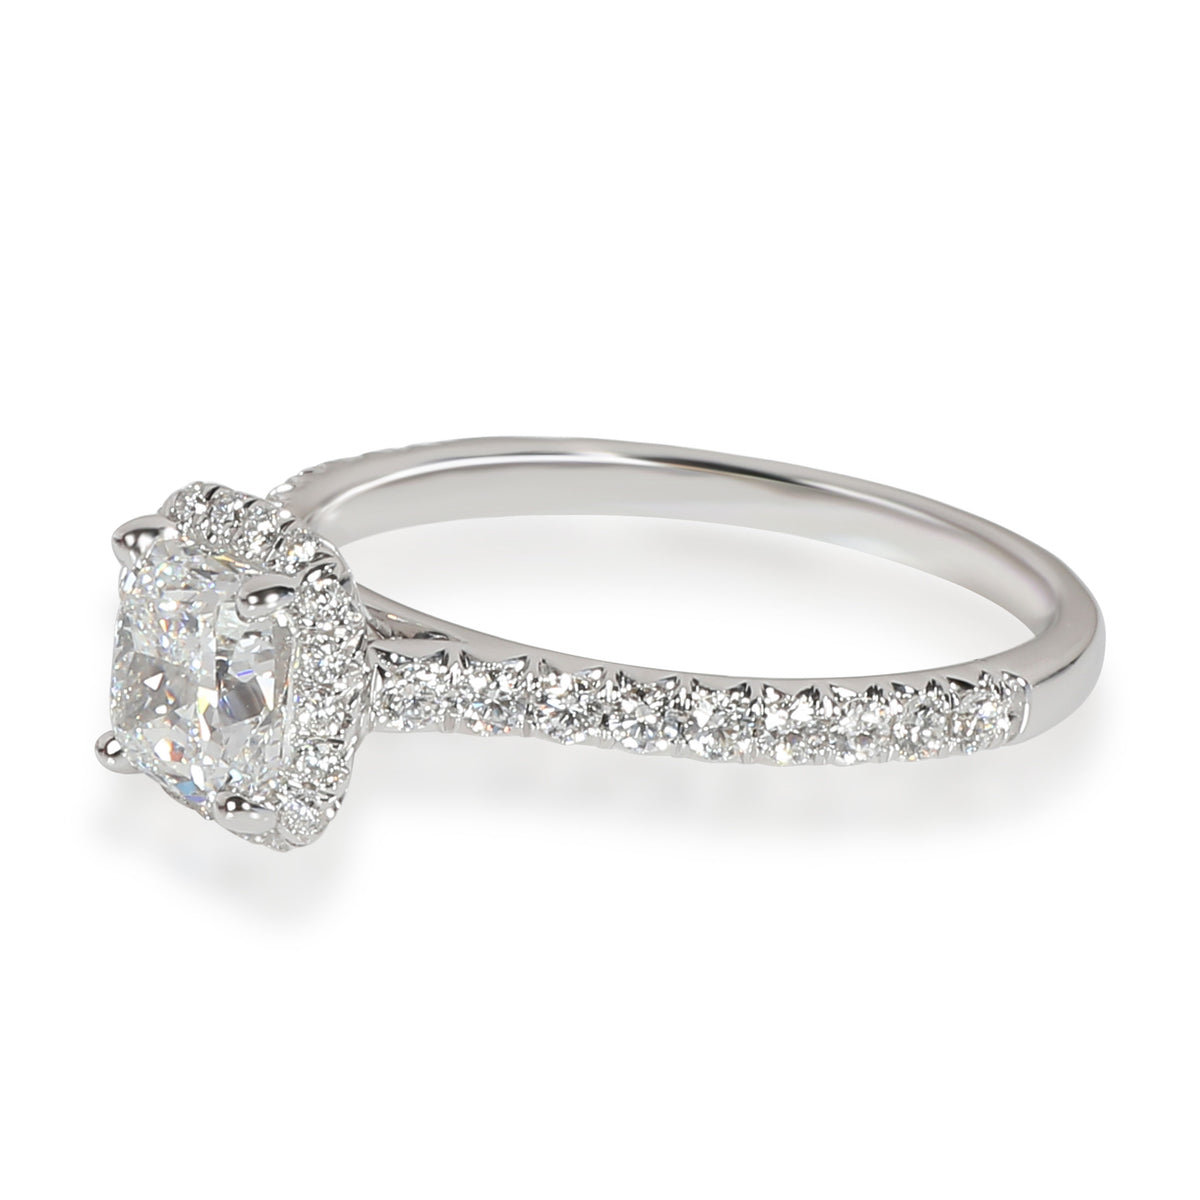 James Allen Halo Diamond Engagement Ring in 14K White Gold GIA F IF 1.23 CTW